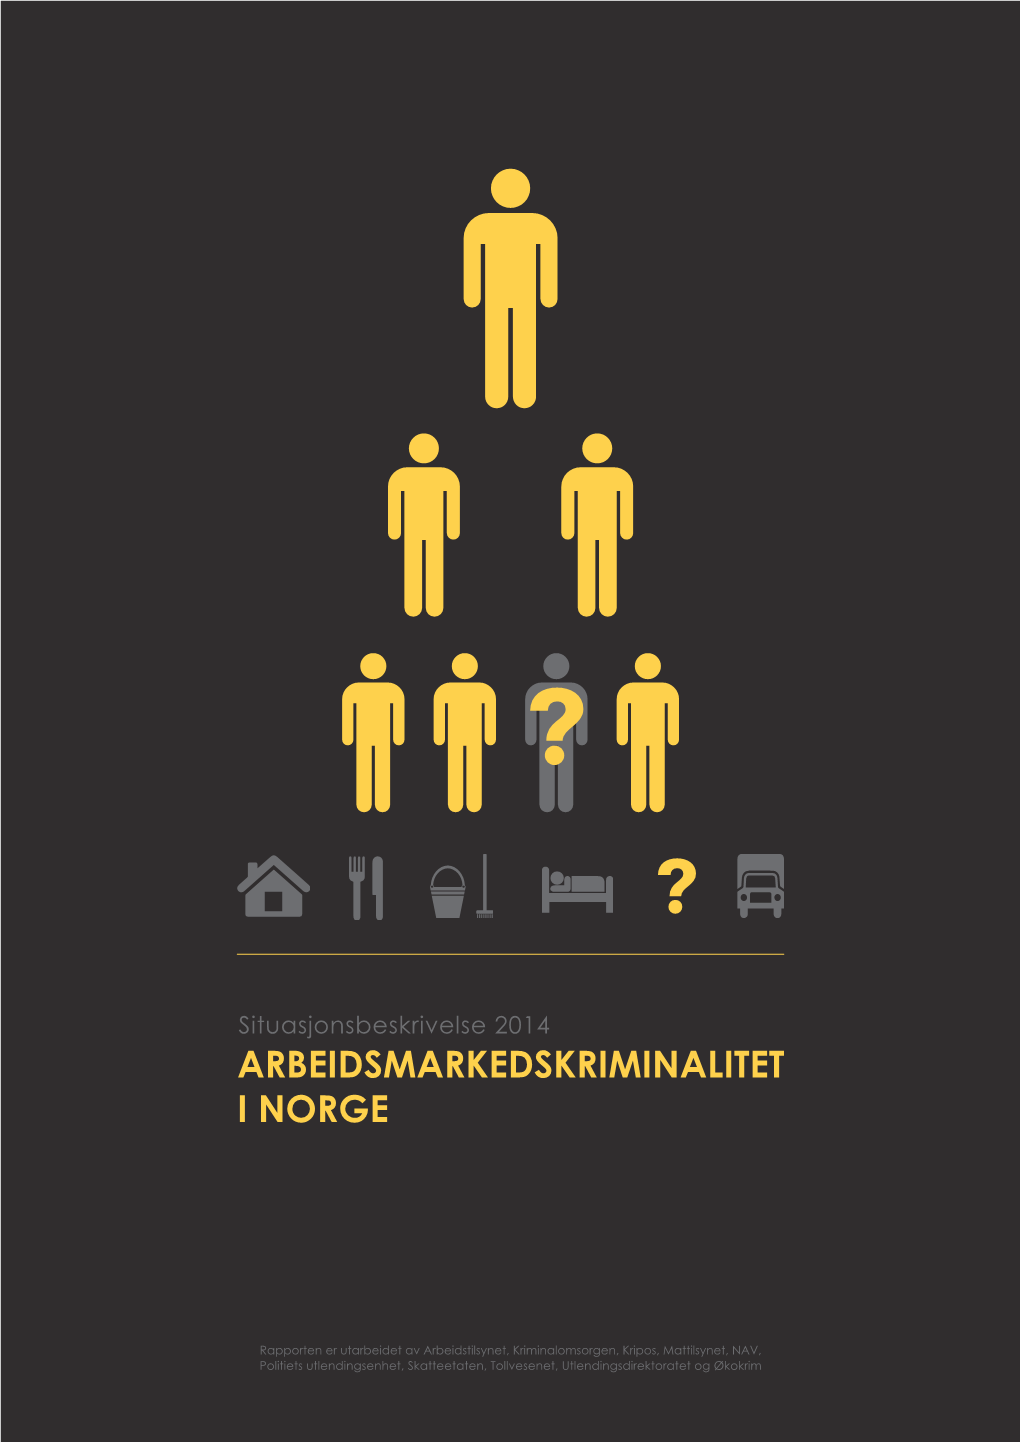 Arbeidsmarkedskriminalitet I Norge – Situasjonsbeskrivelse 2014